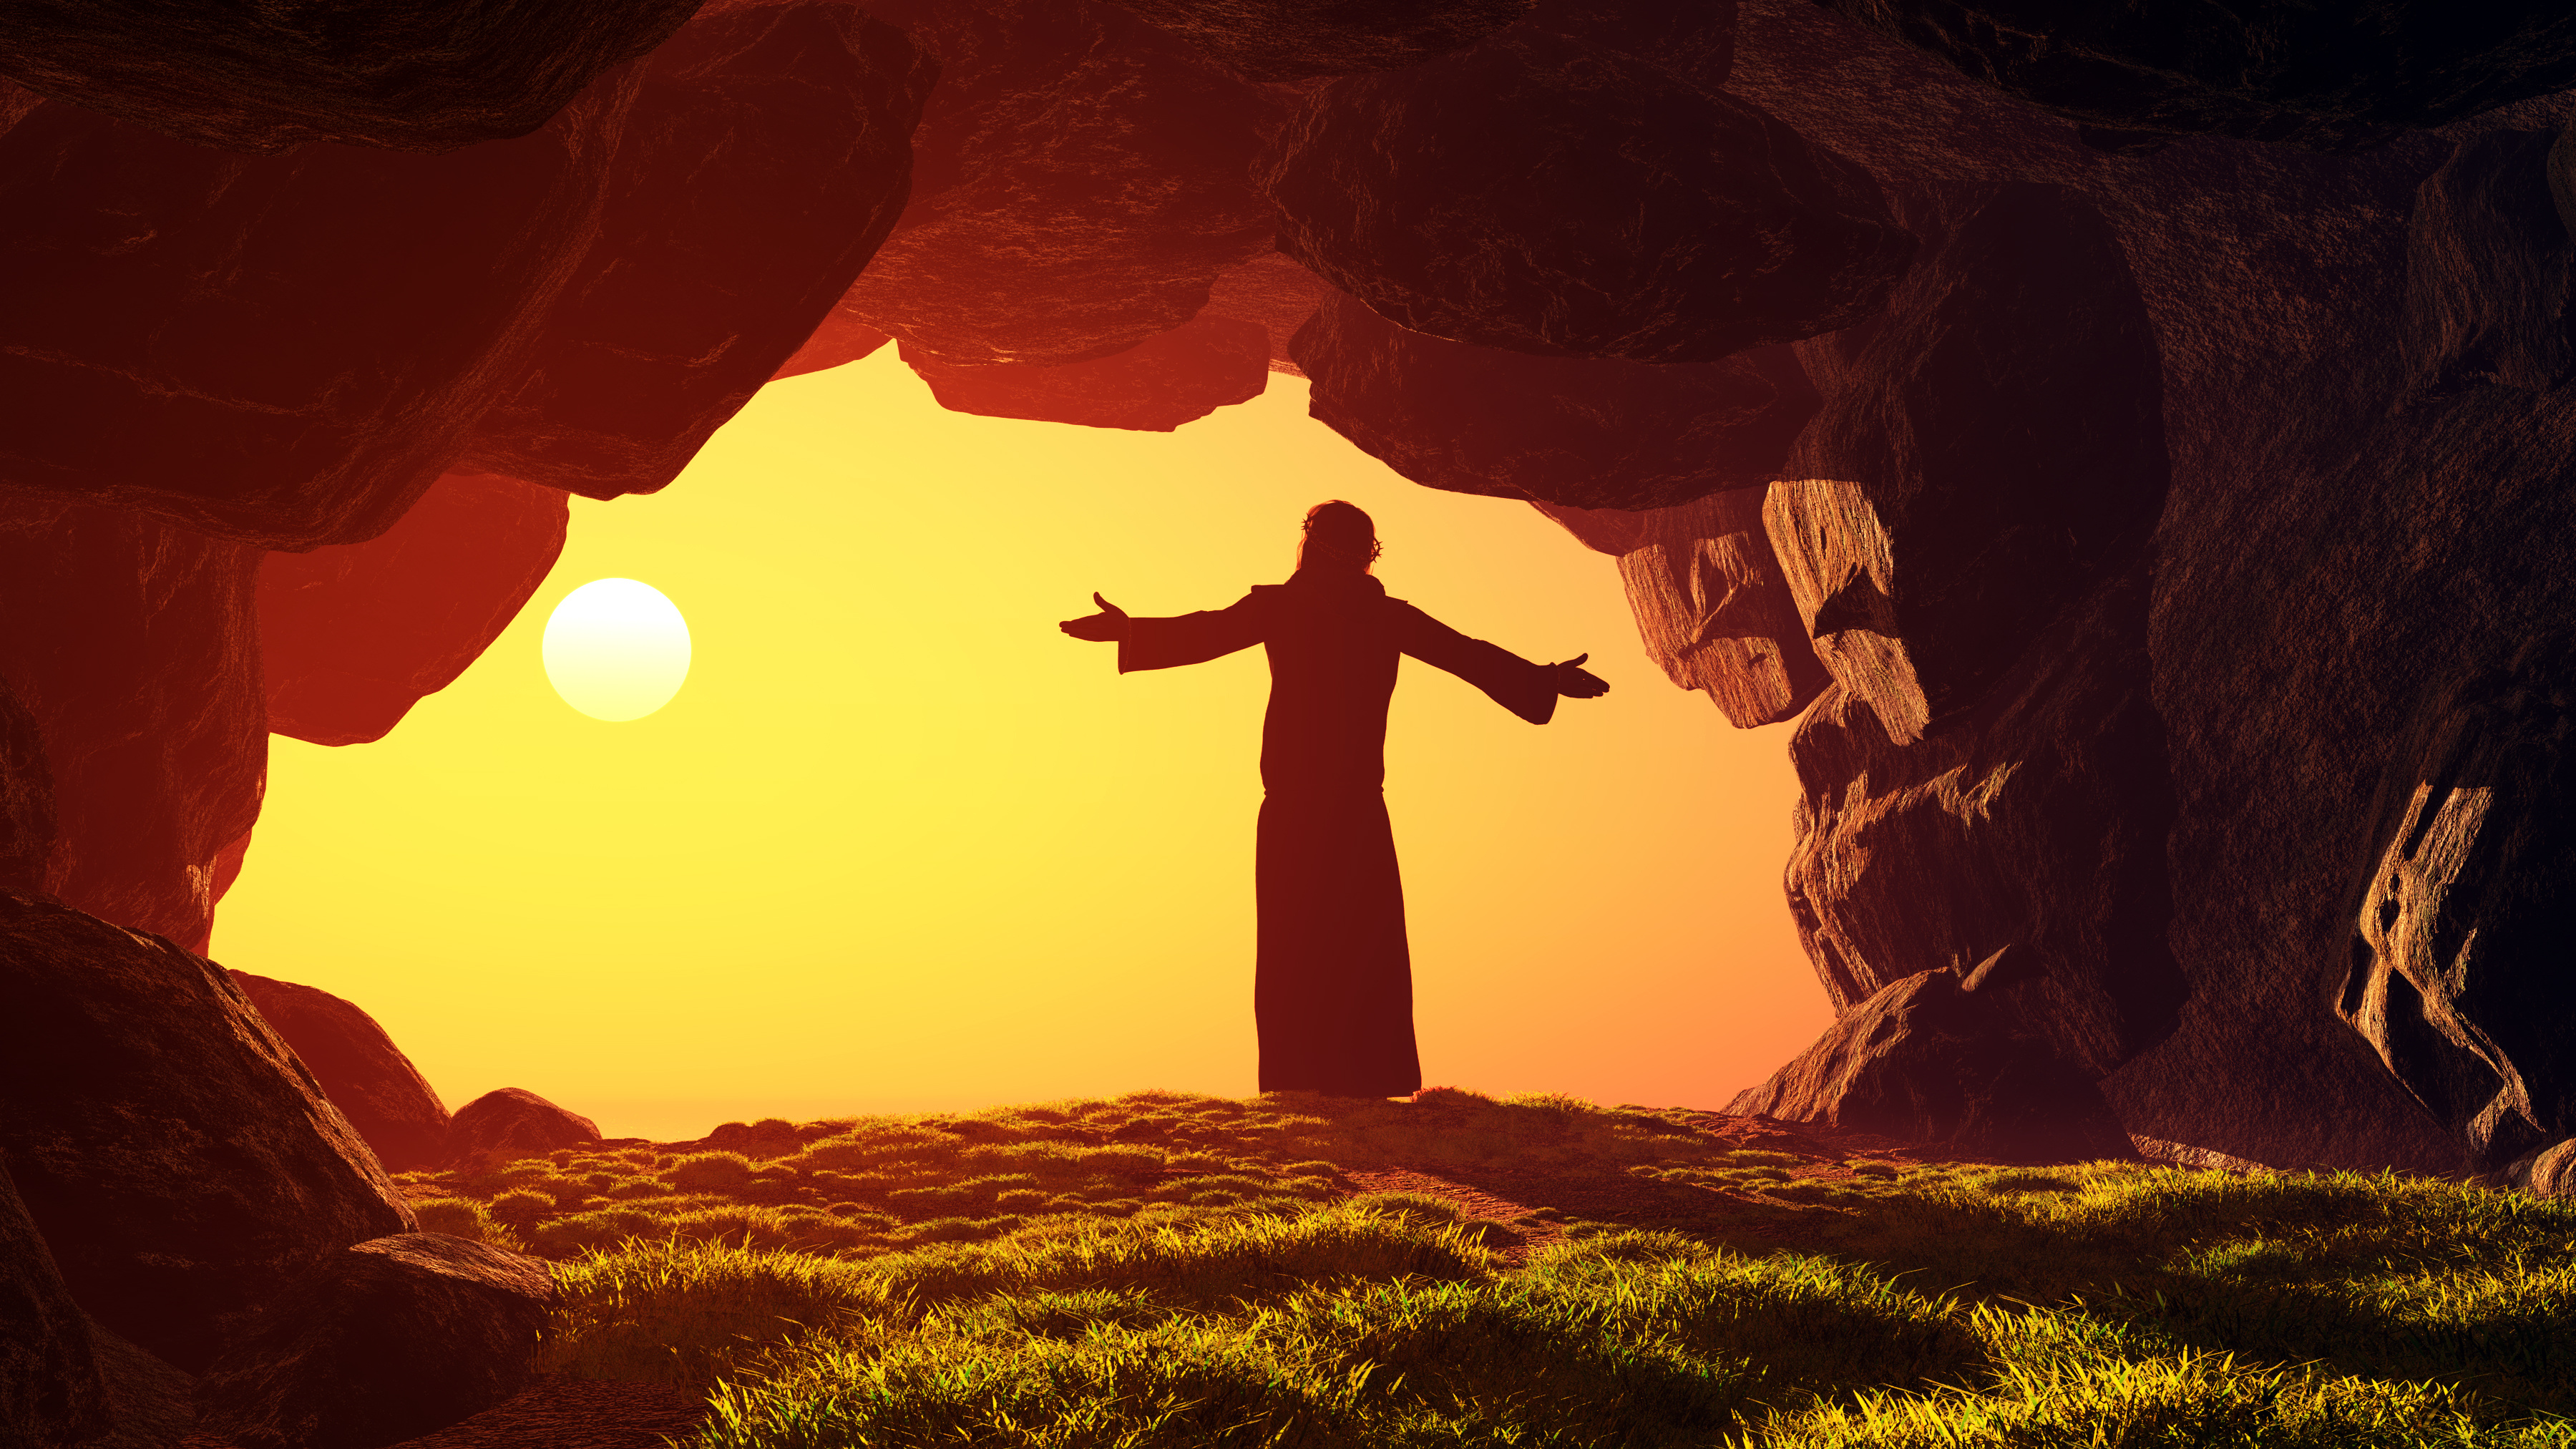 3 Surprising Secrets About The Death & Resurrection of